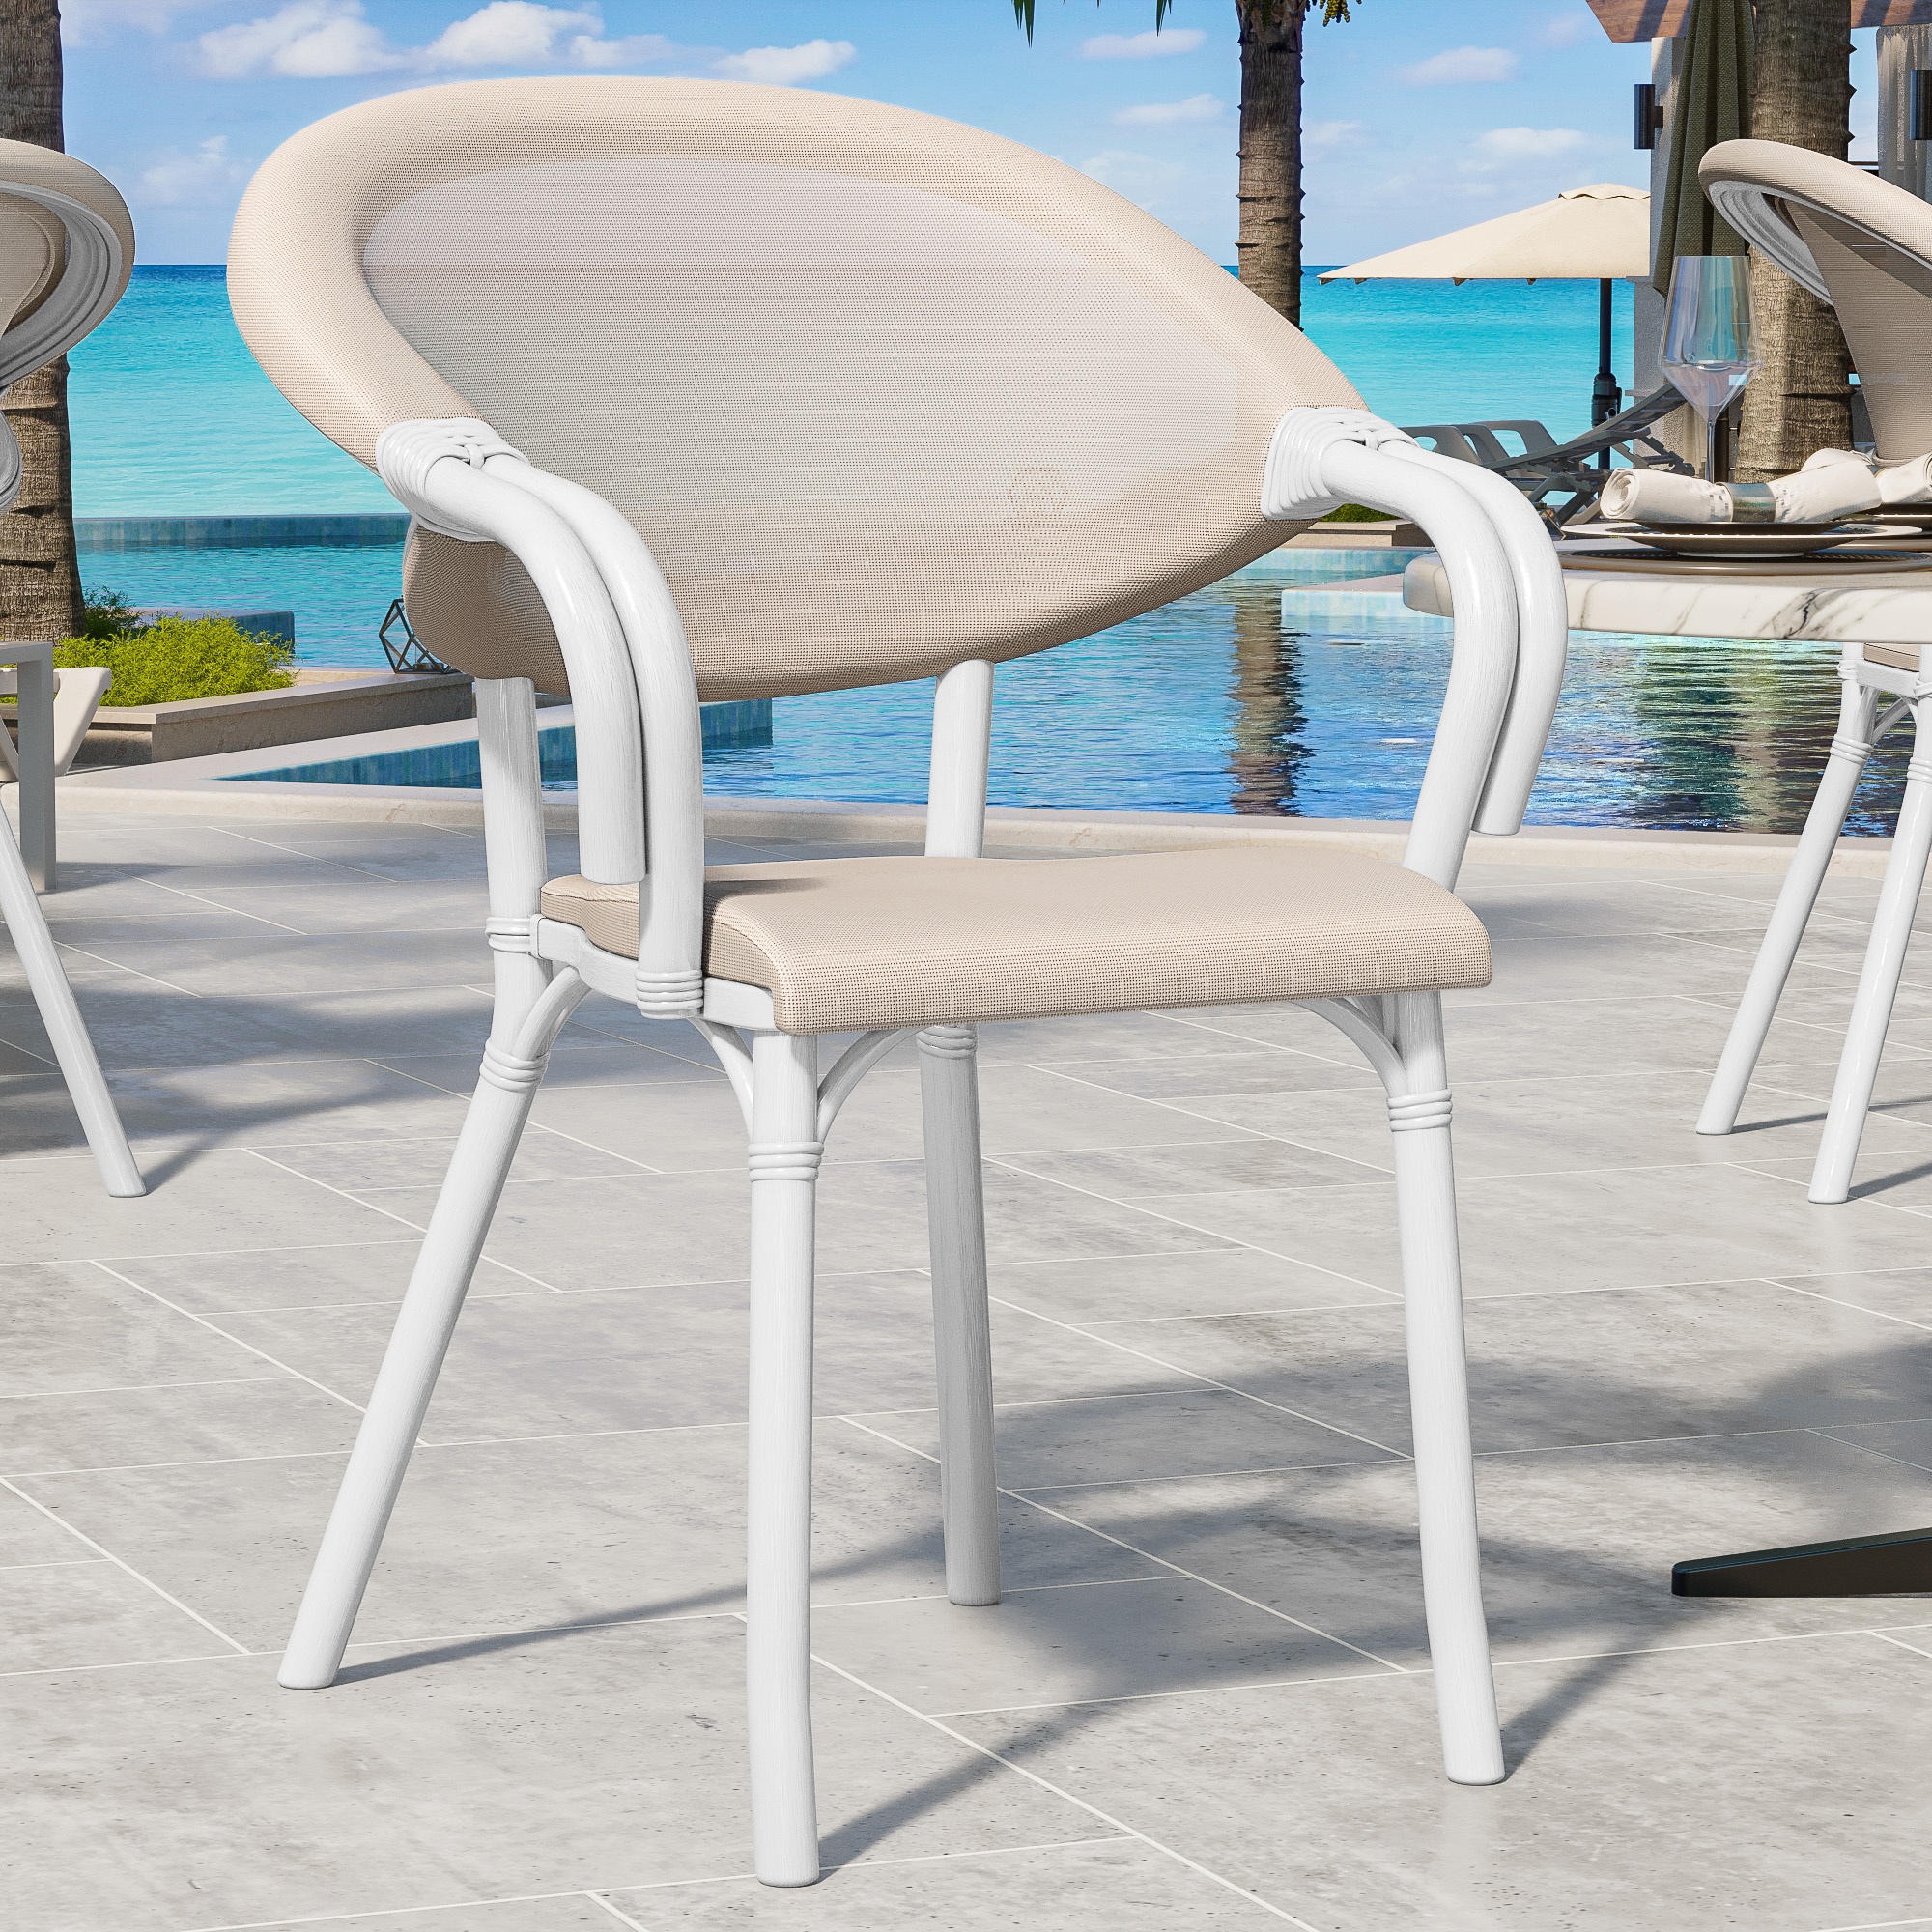 4er-Set Bsitro Textilen Stuhl | Schwarz | Weiß | Stapelbar | Textilen Gewebe Stuhl, Terrassen Textilen Stuhl, Outdoor Textilen Stuhl